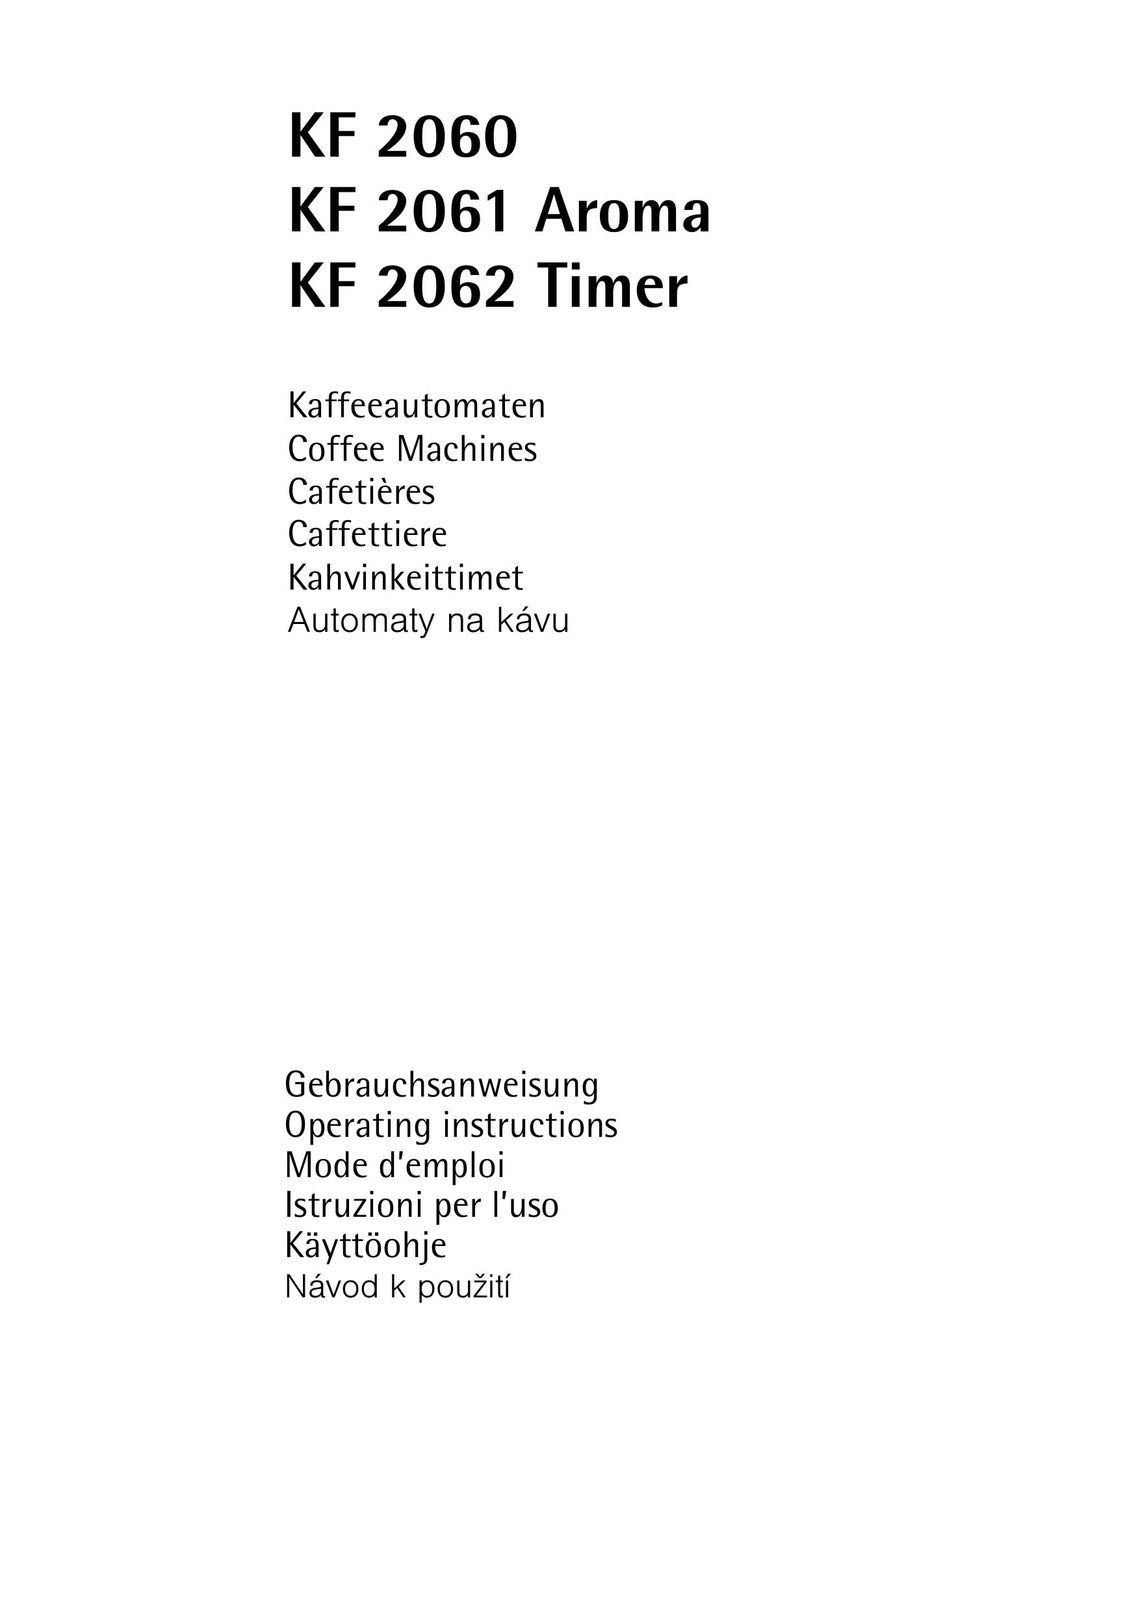 AEG KF 2061 AROMA Coffeemaker User Manual